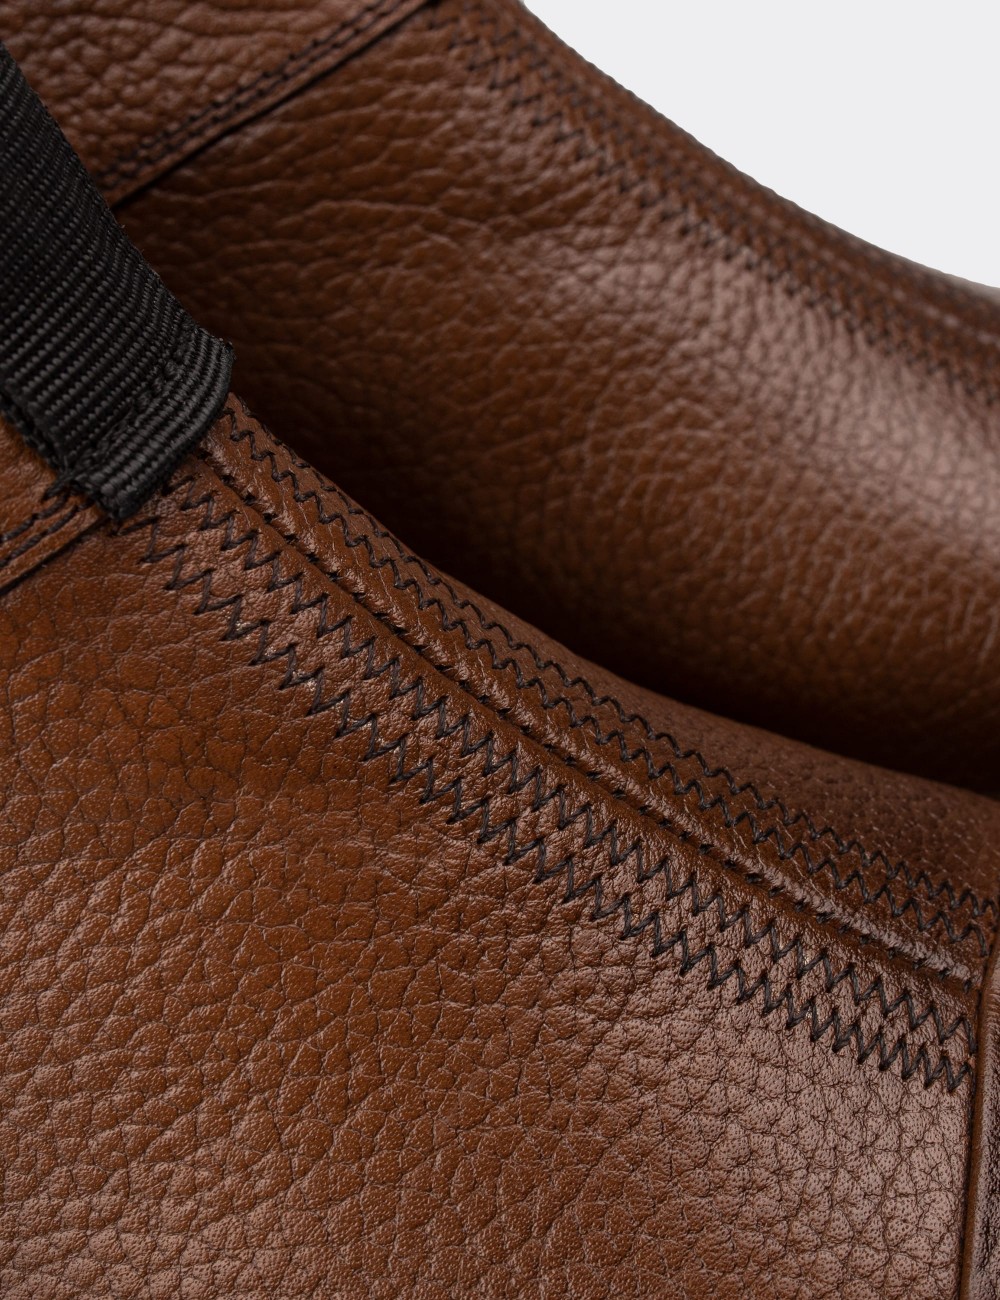 Tan  Leather Boots - 01852MTBAP01